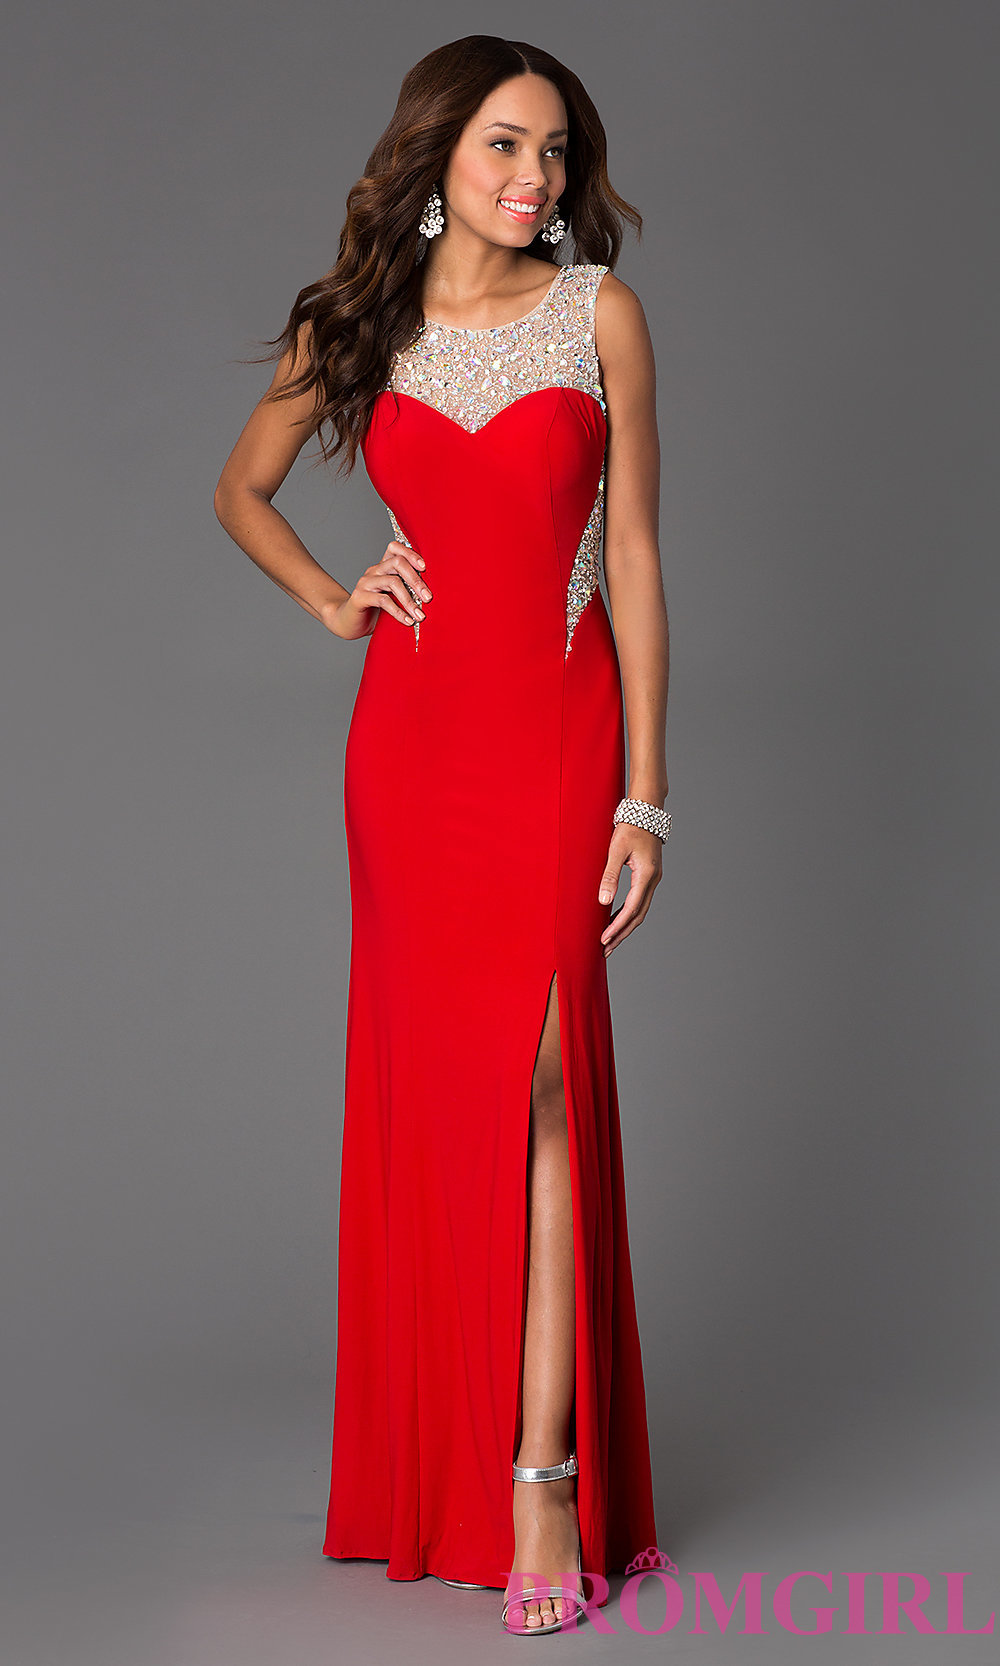 Red Dress Sleeveless & A Wonderful Start - Dresses Ask